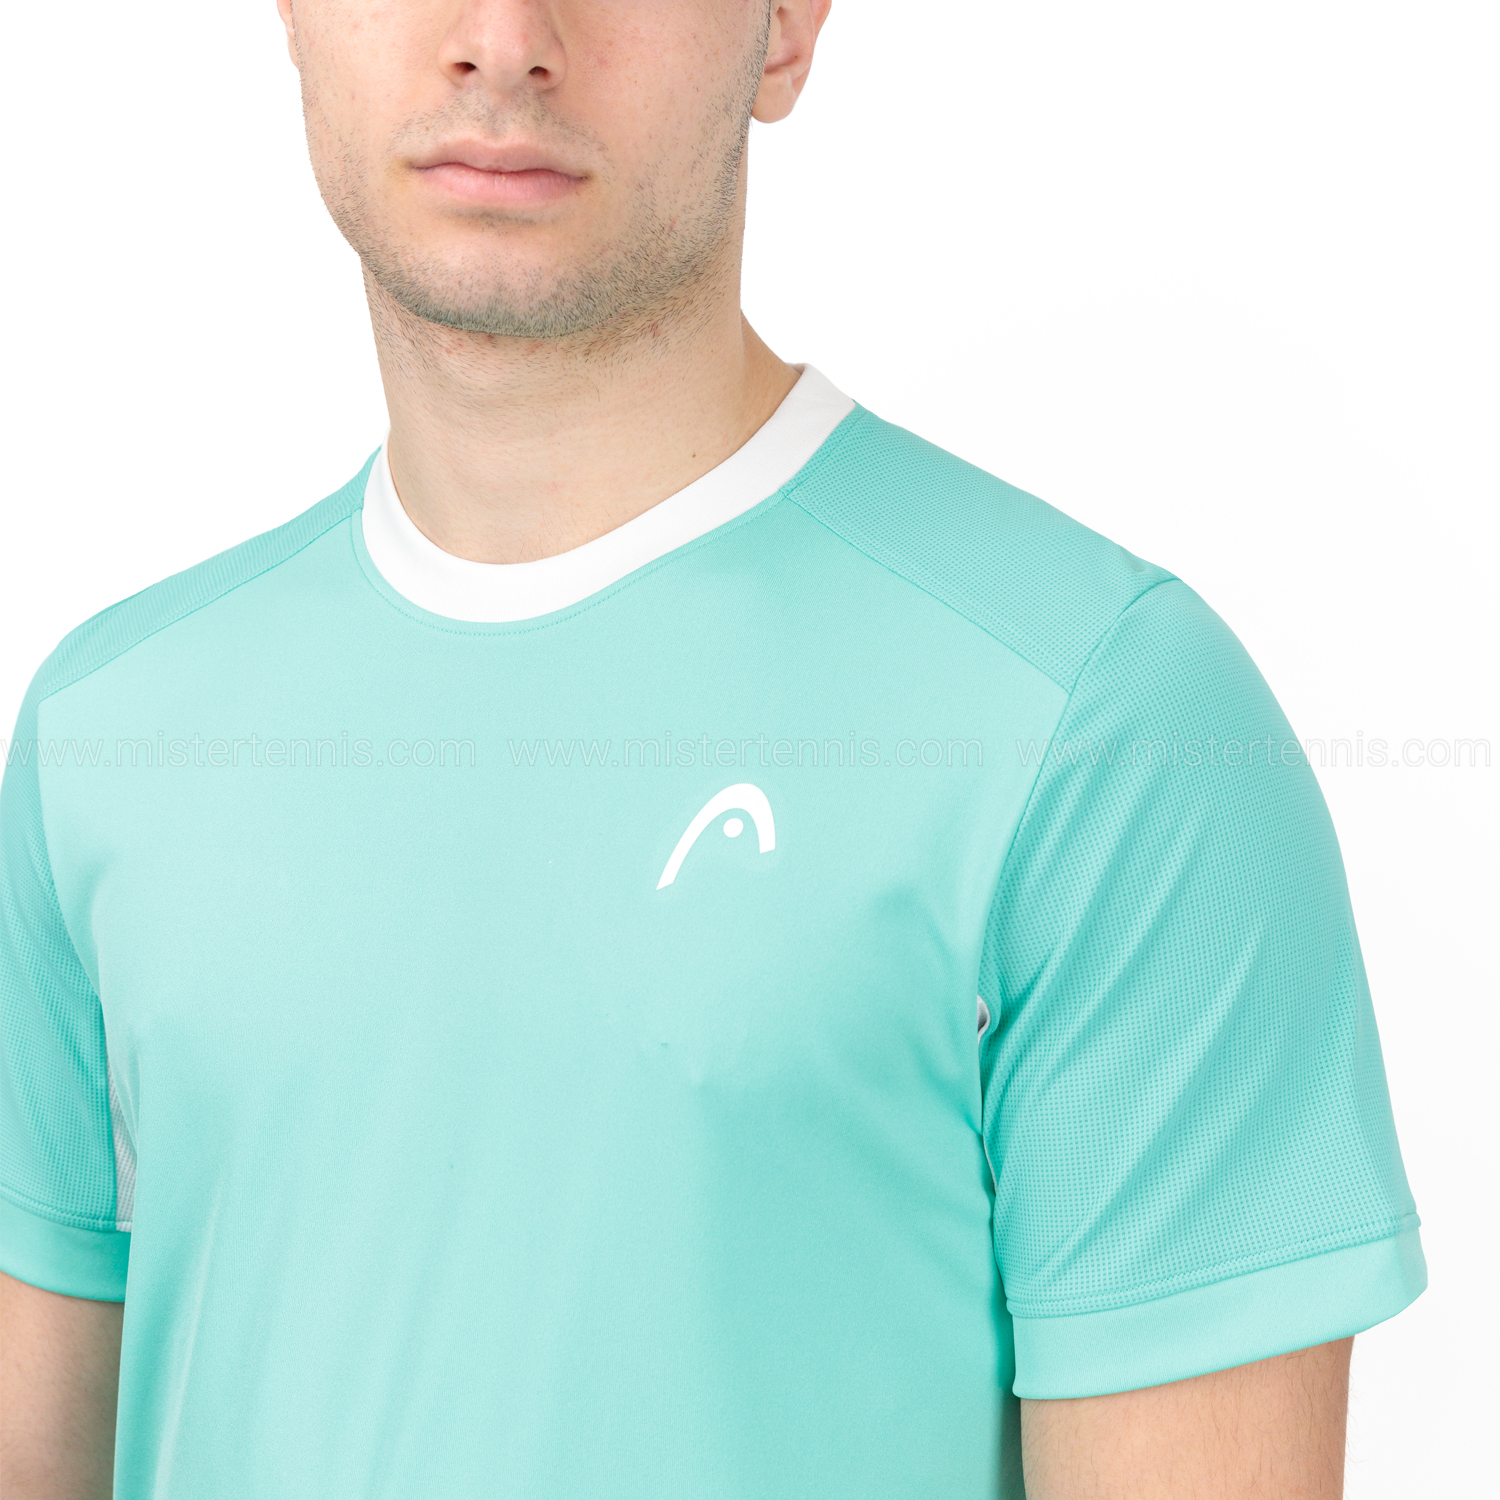 Head Slice Logo Camiseta - Turquoise